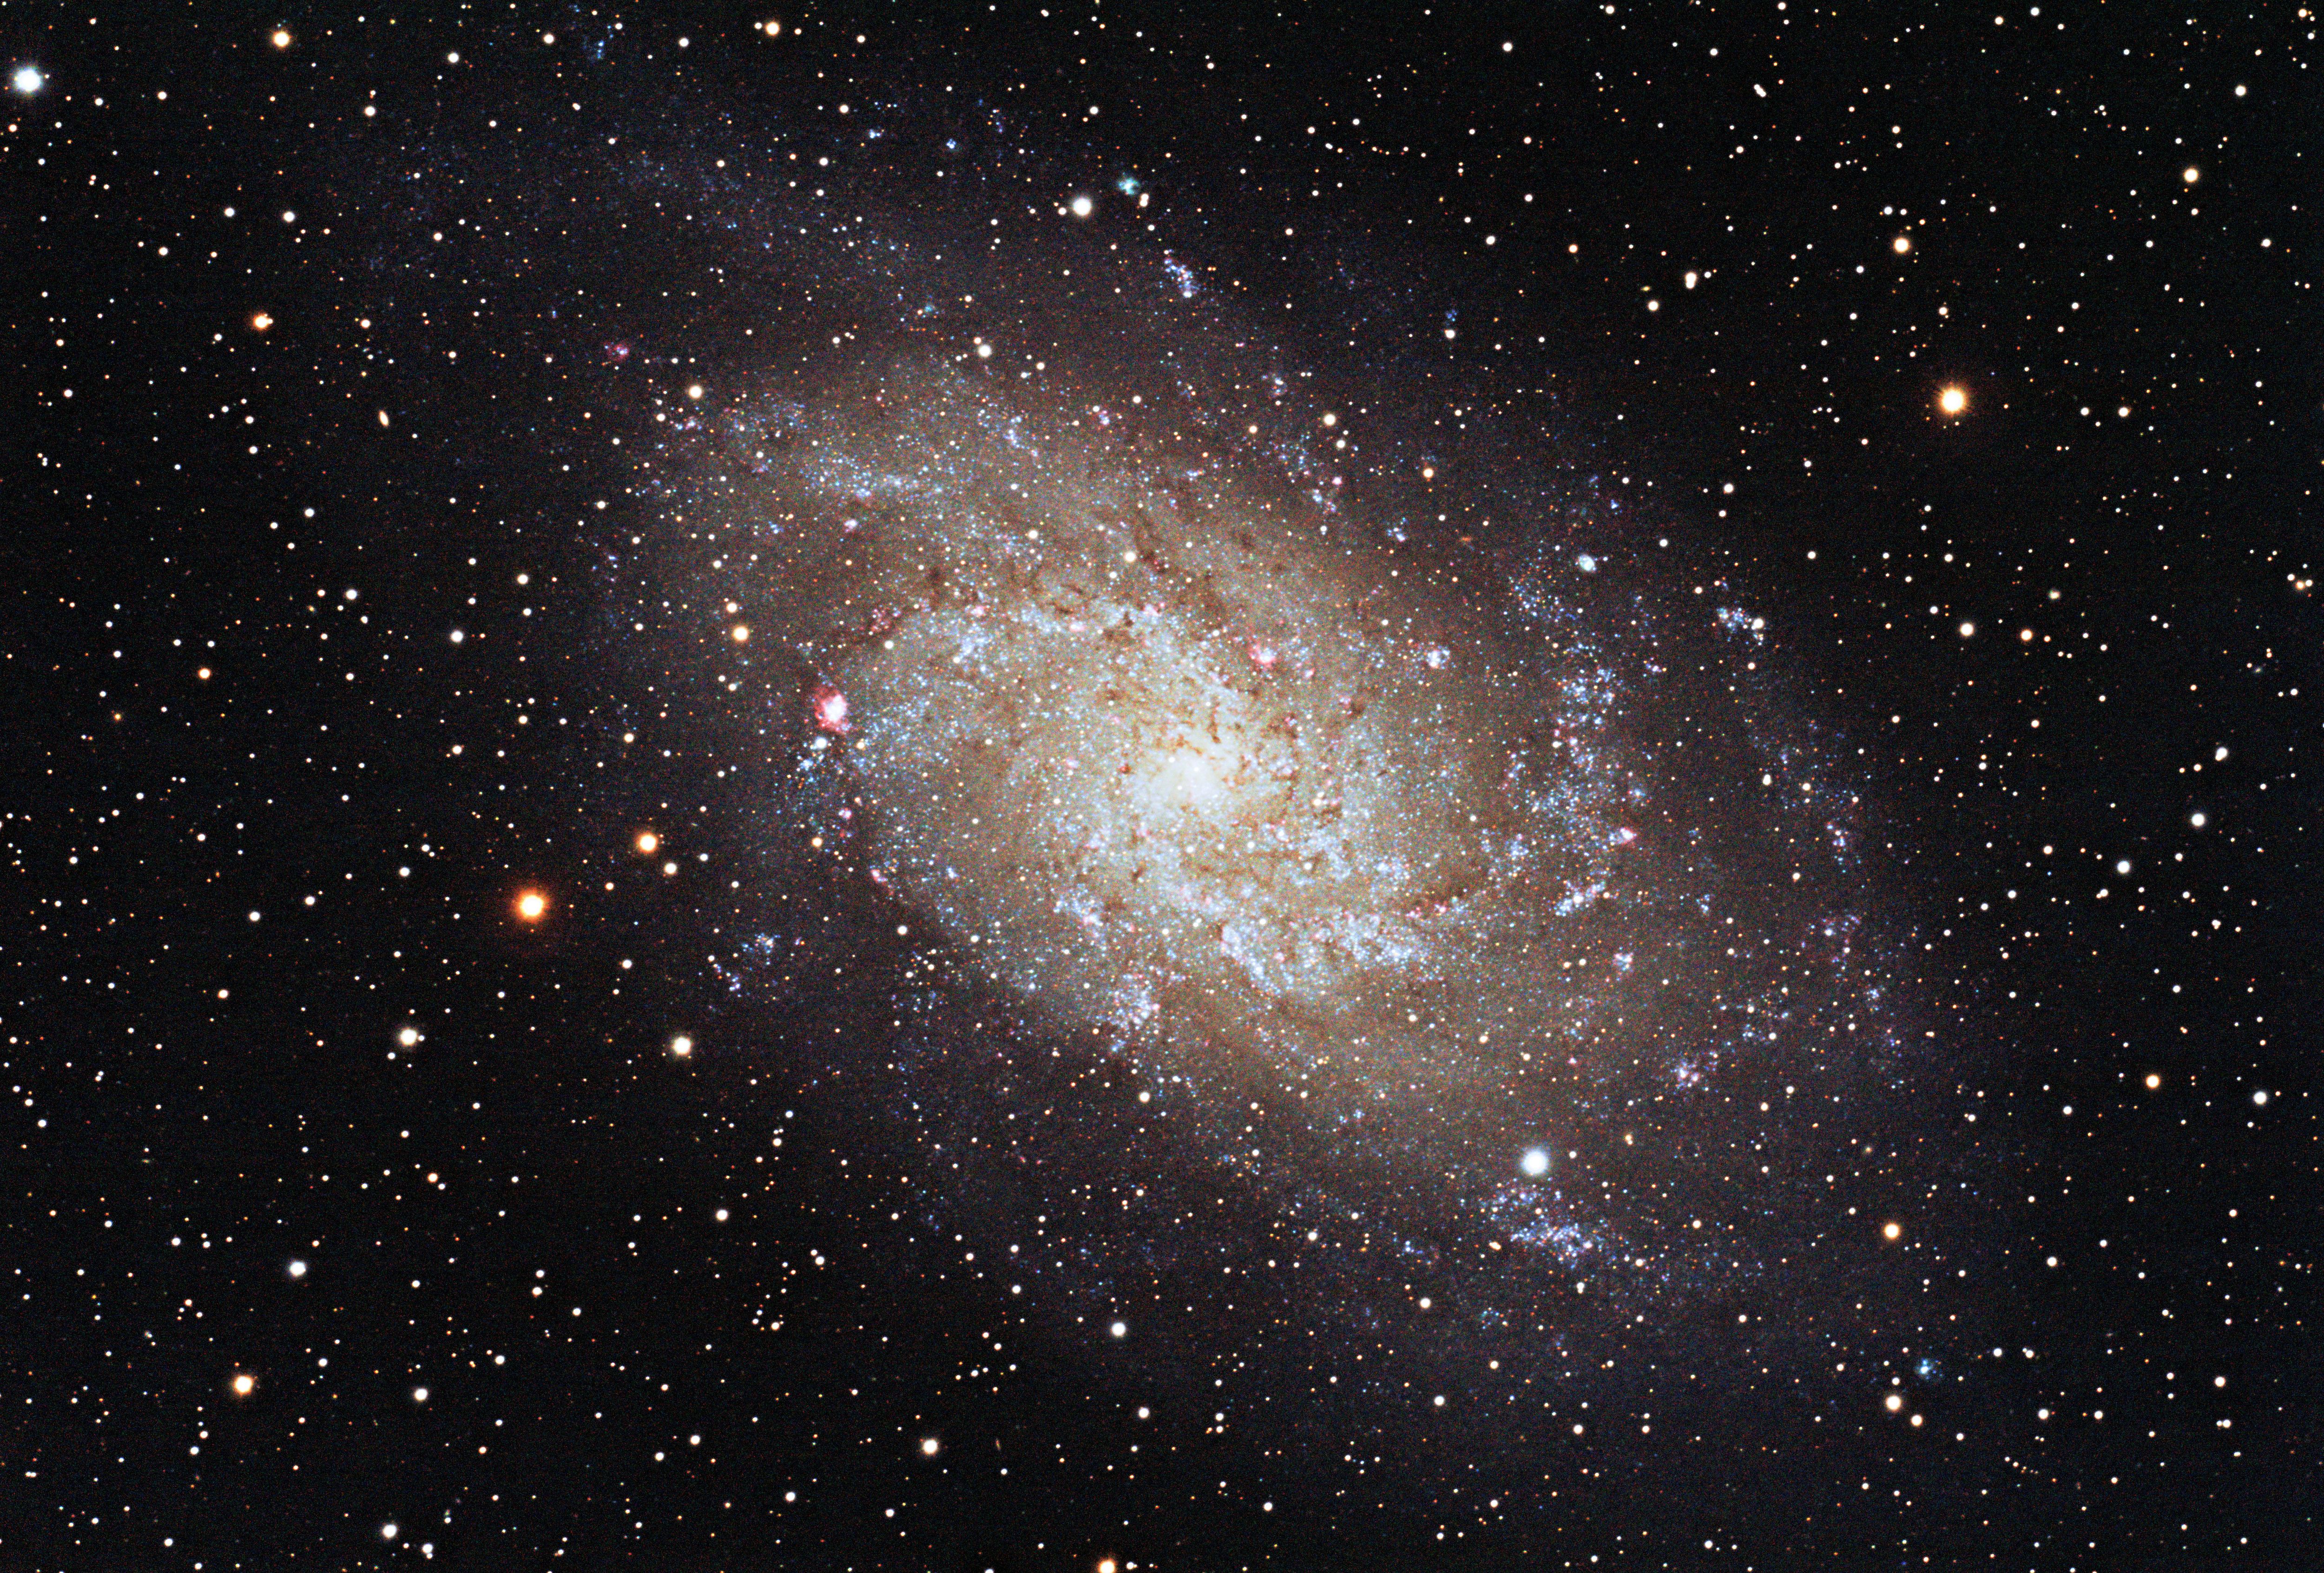 M33 - Triangulum Galaxy 10-1-13 at US Store